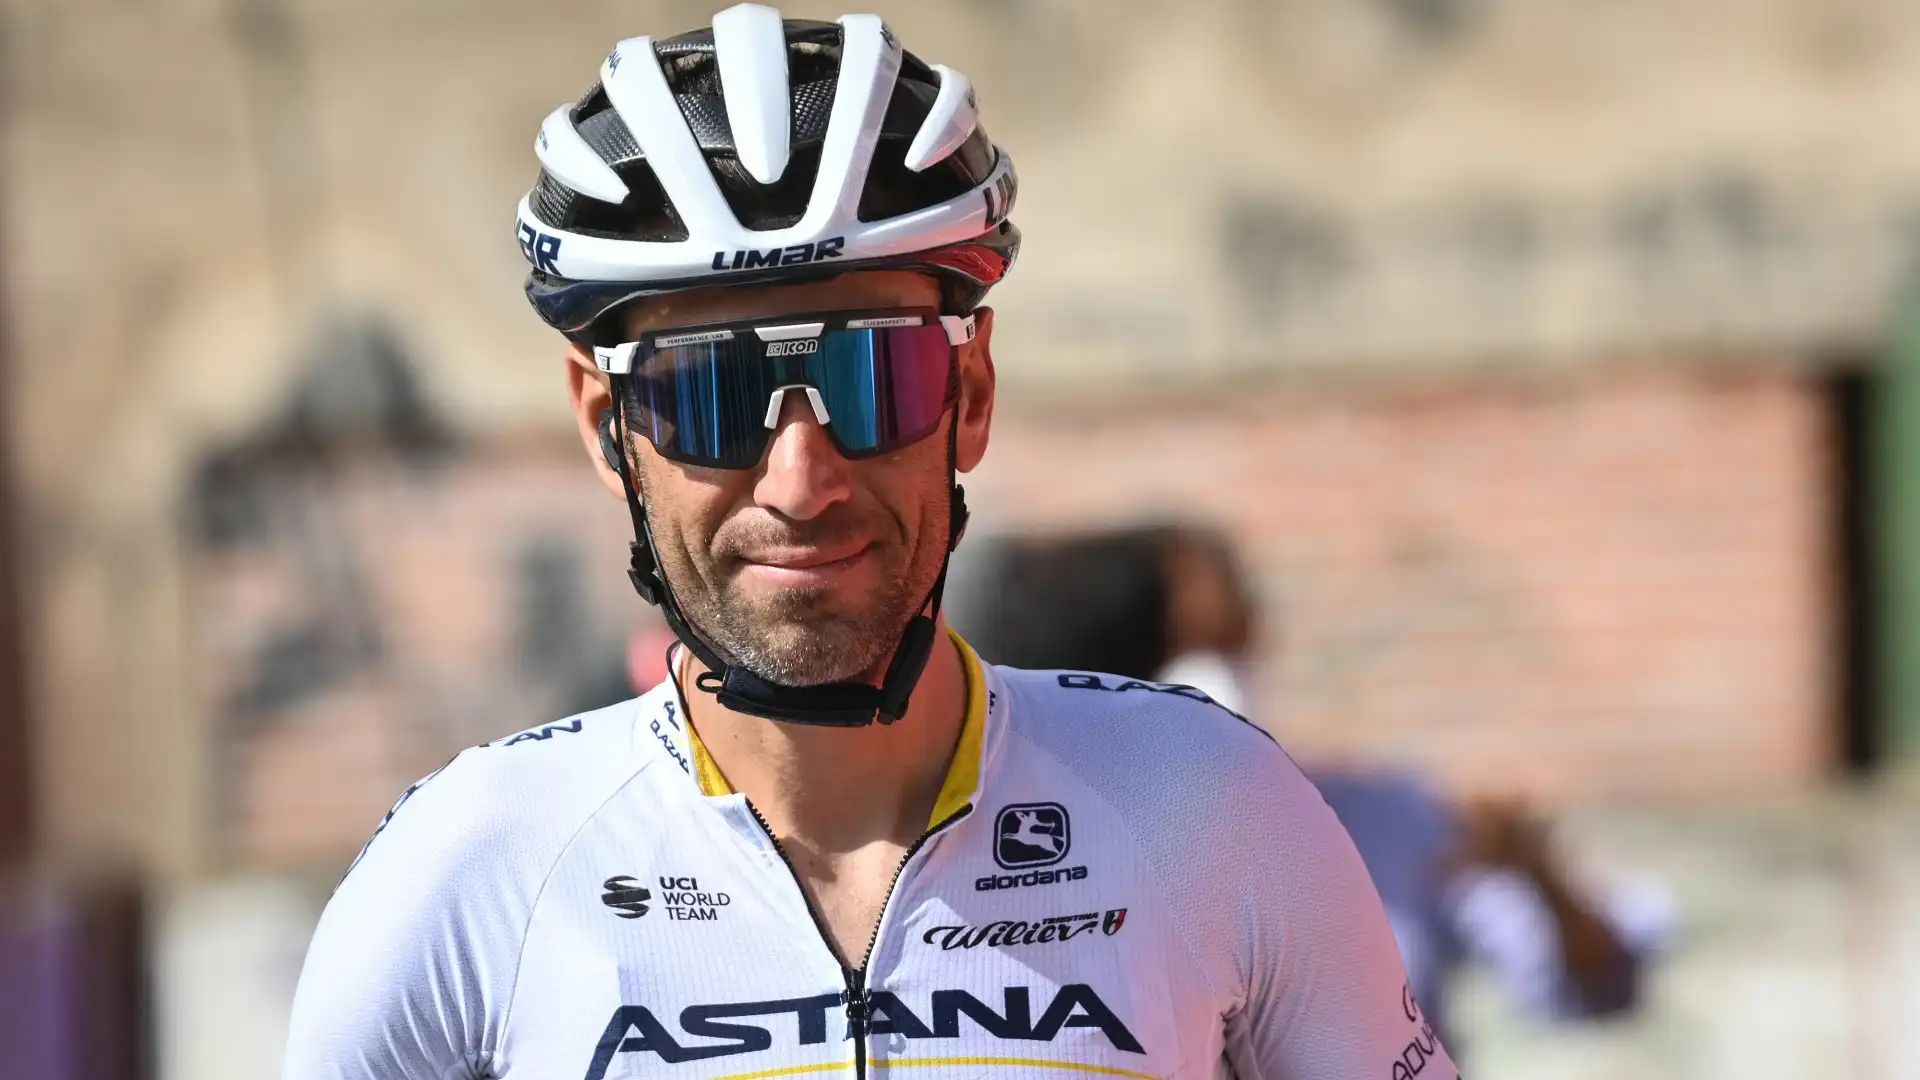 Vincenzo Nibali sente già nostalgia del Giro d’Italia